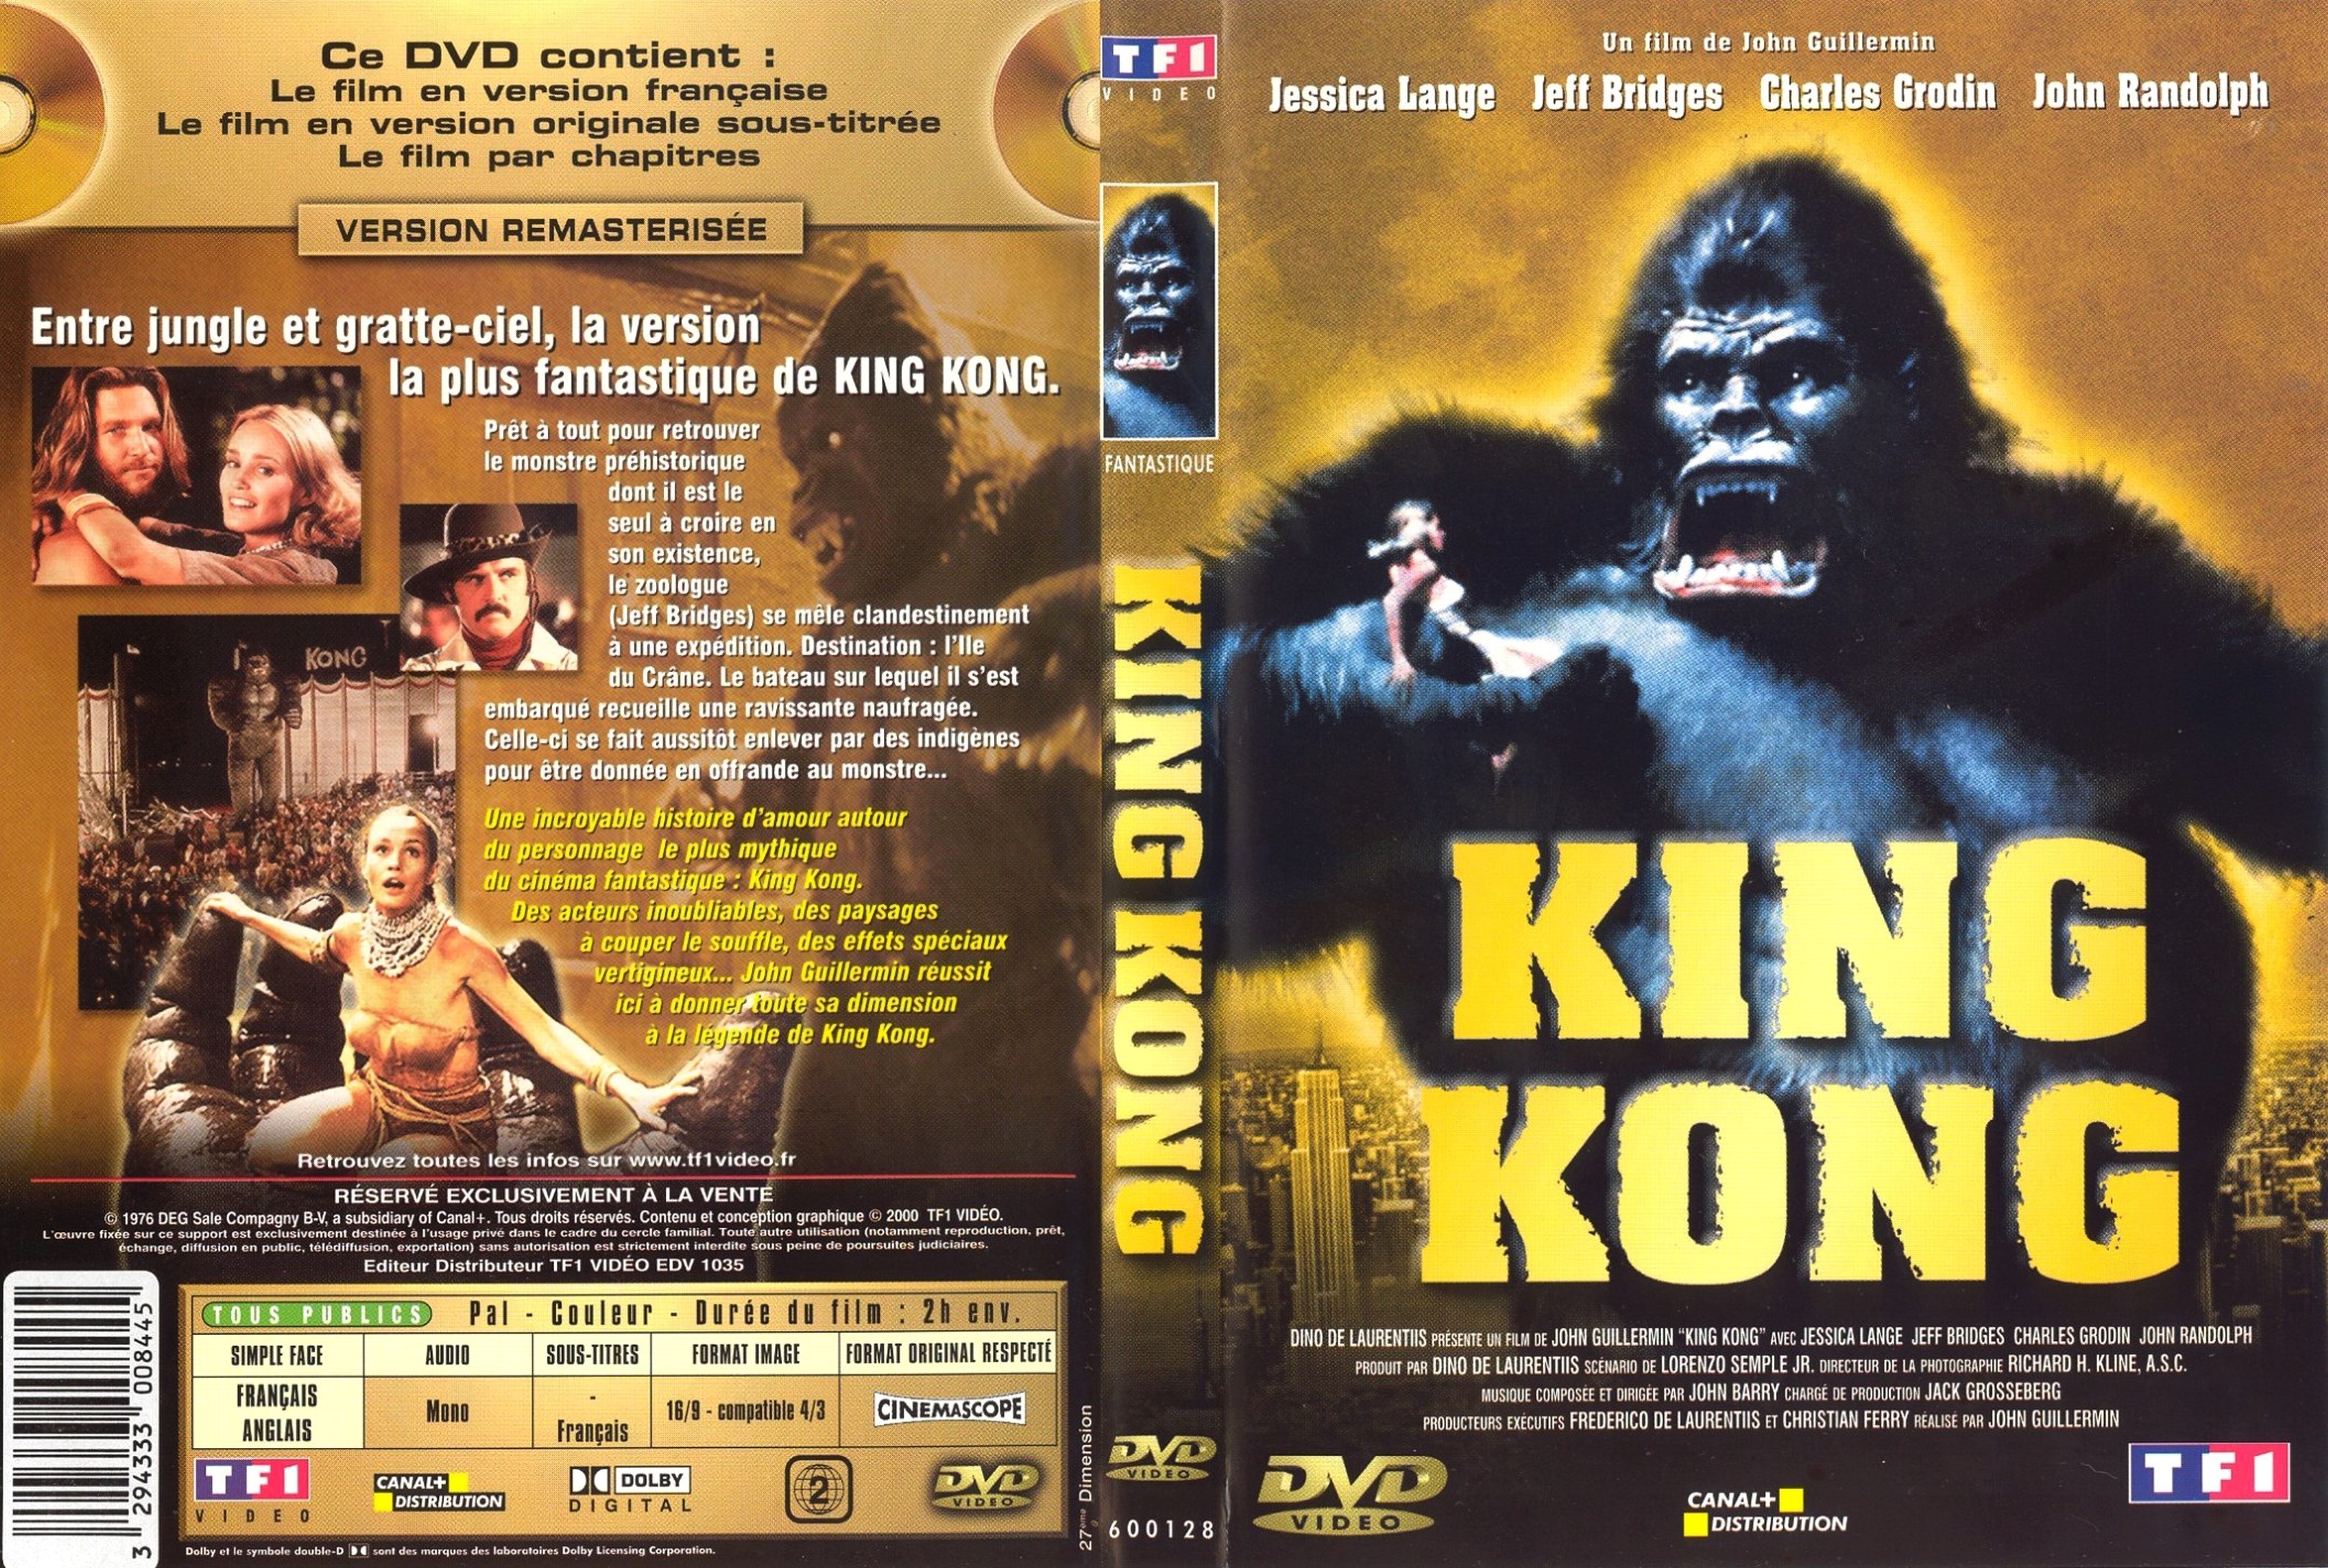 Jaquette DVD King Kong 1976